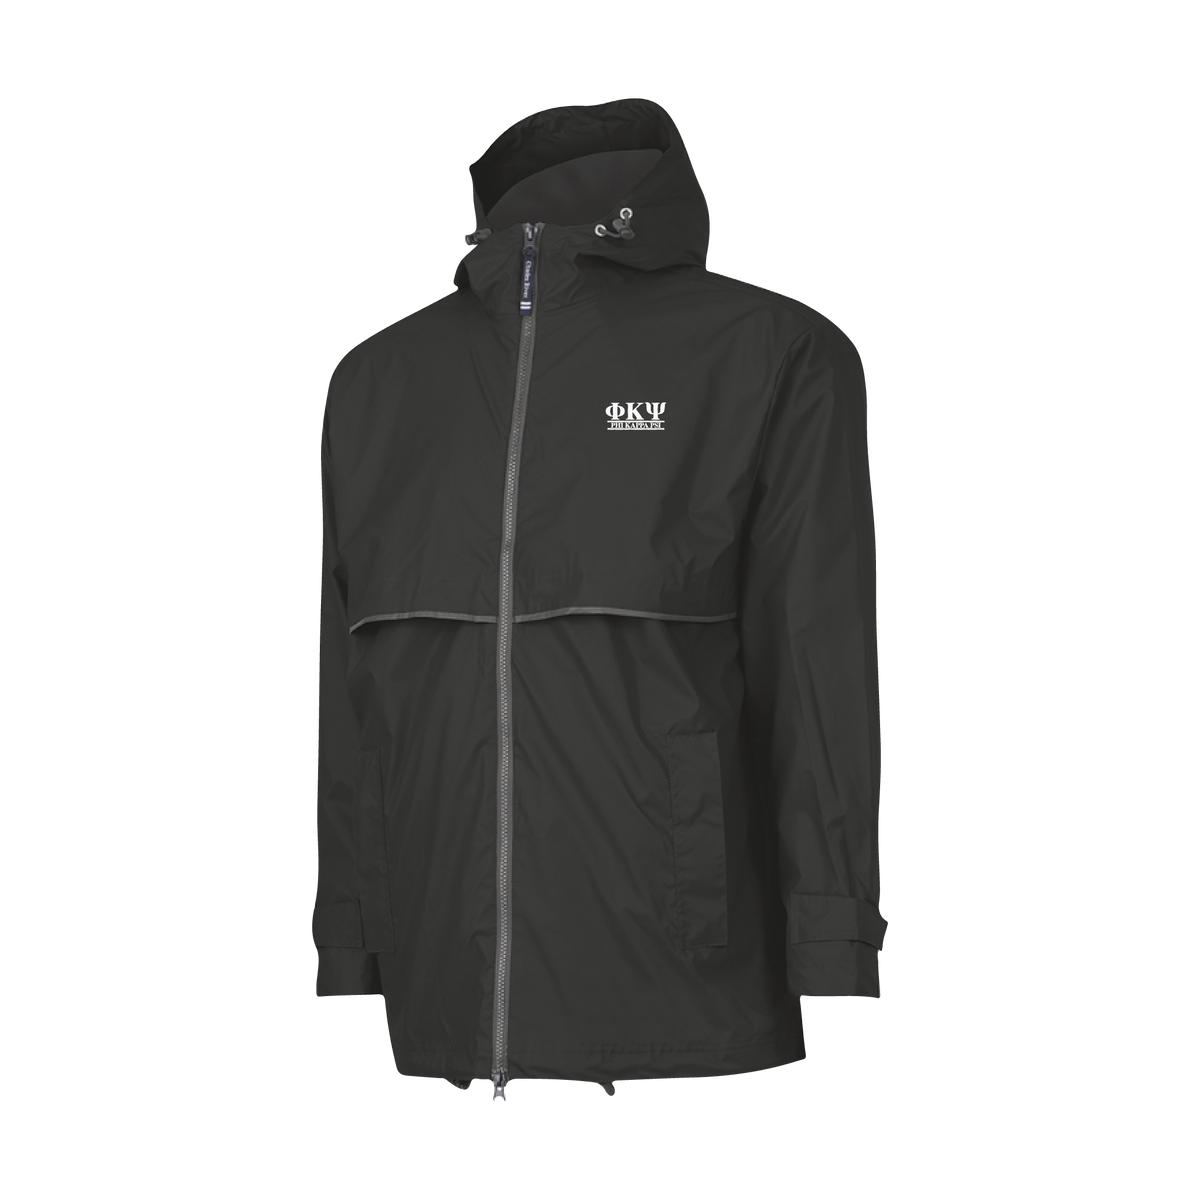 B-Unlimited Greek - Rain Jacket (PHI PSI) - Charles River - 9199 - New Englander Rain Jacket - Black